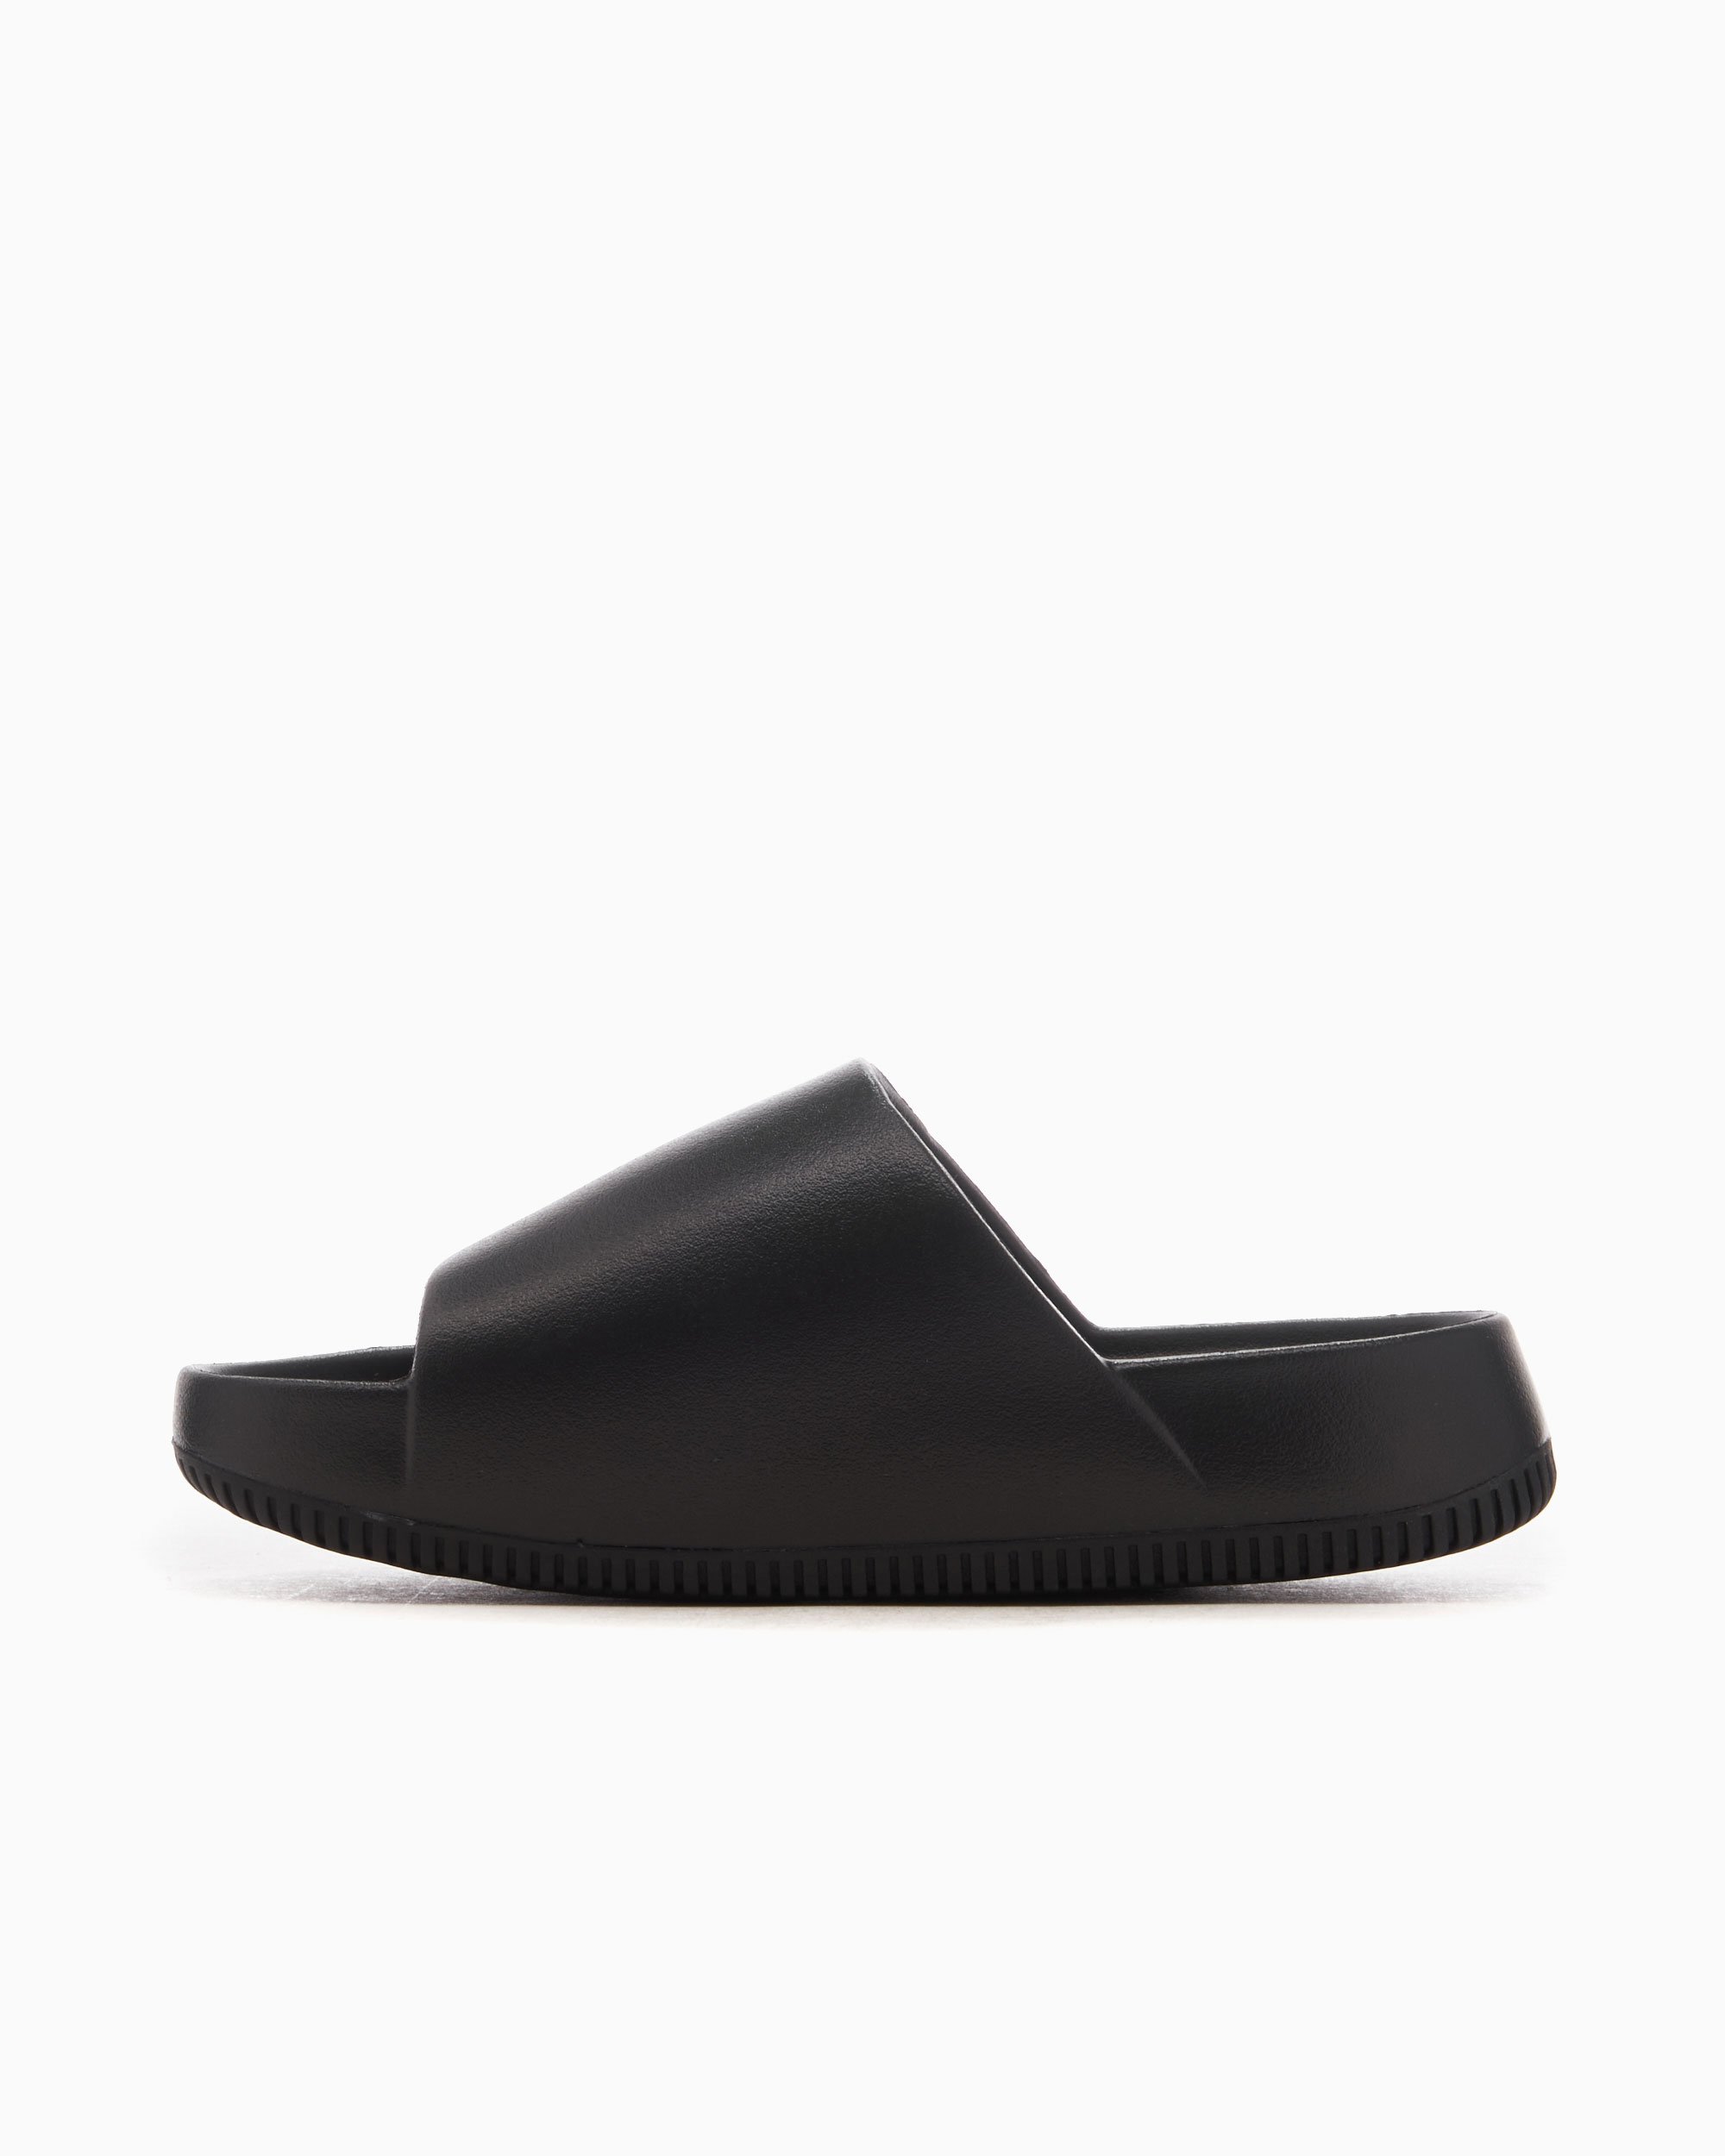 Nike Calm Slide Black FD4116-001| FOOTDISTRICT